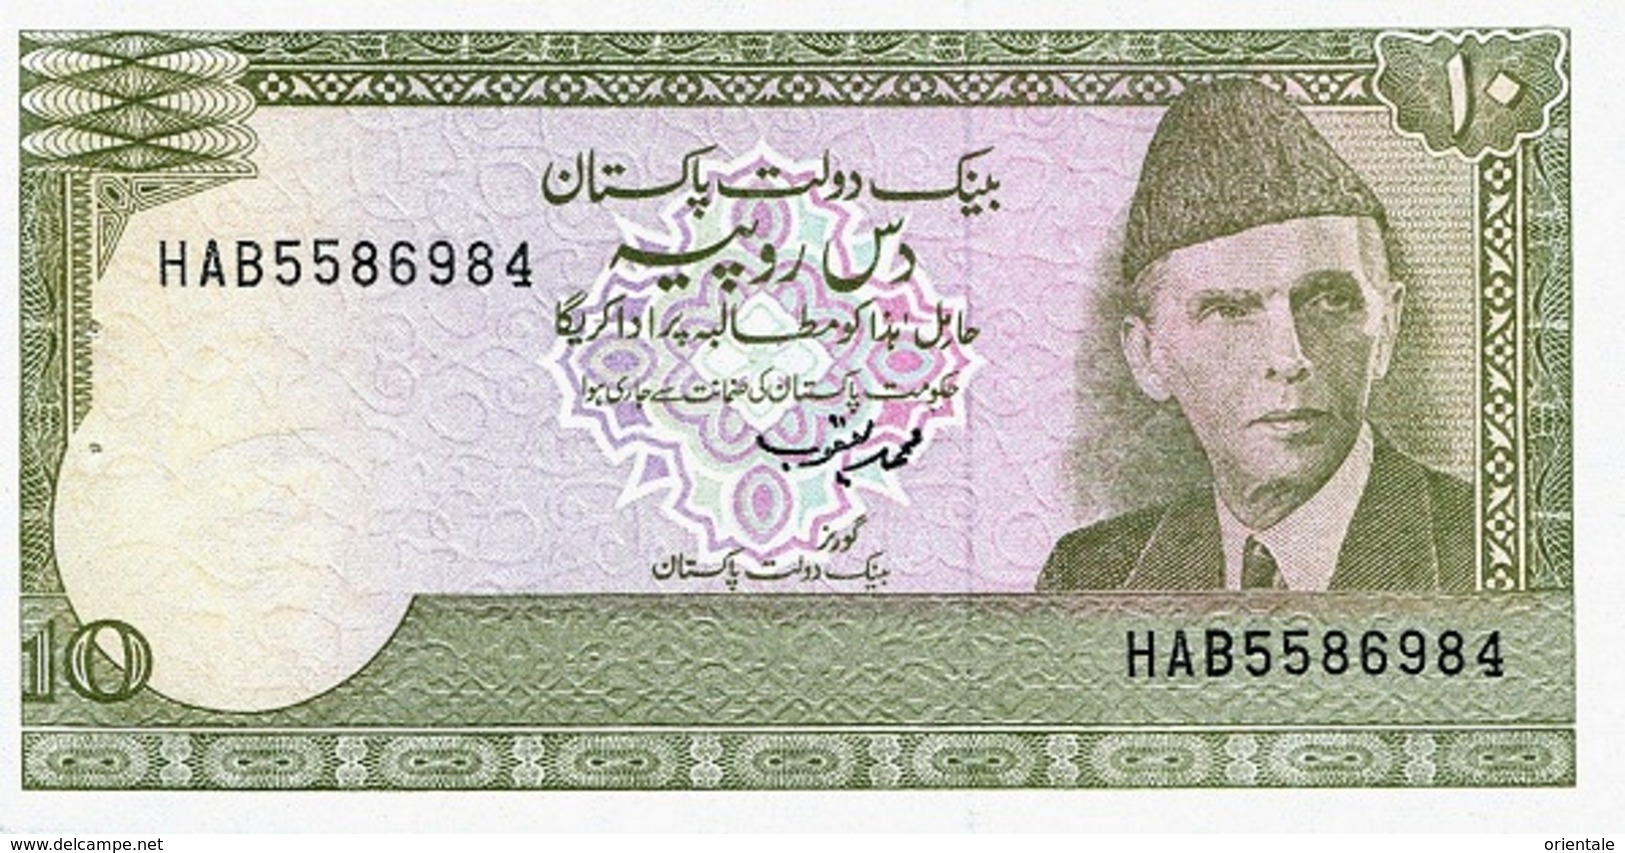 PAKISTAN P. 39 10 R 1983 UNC - Pakistan